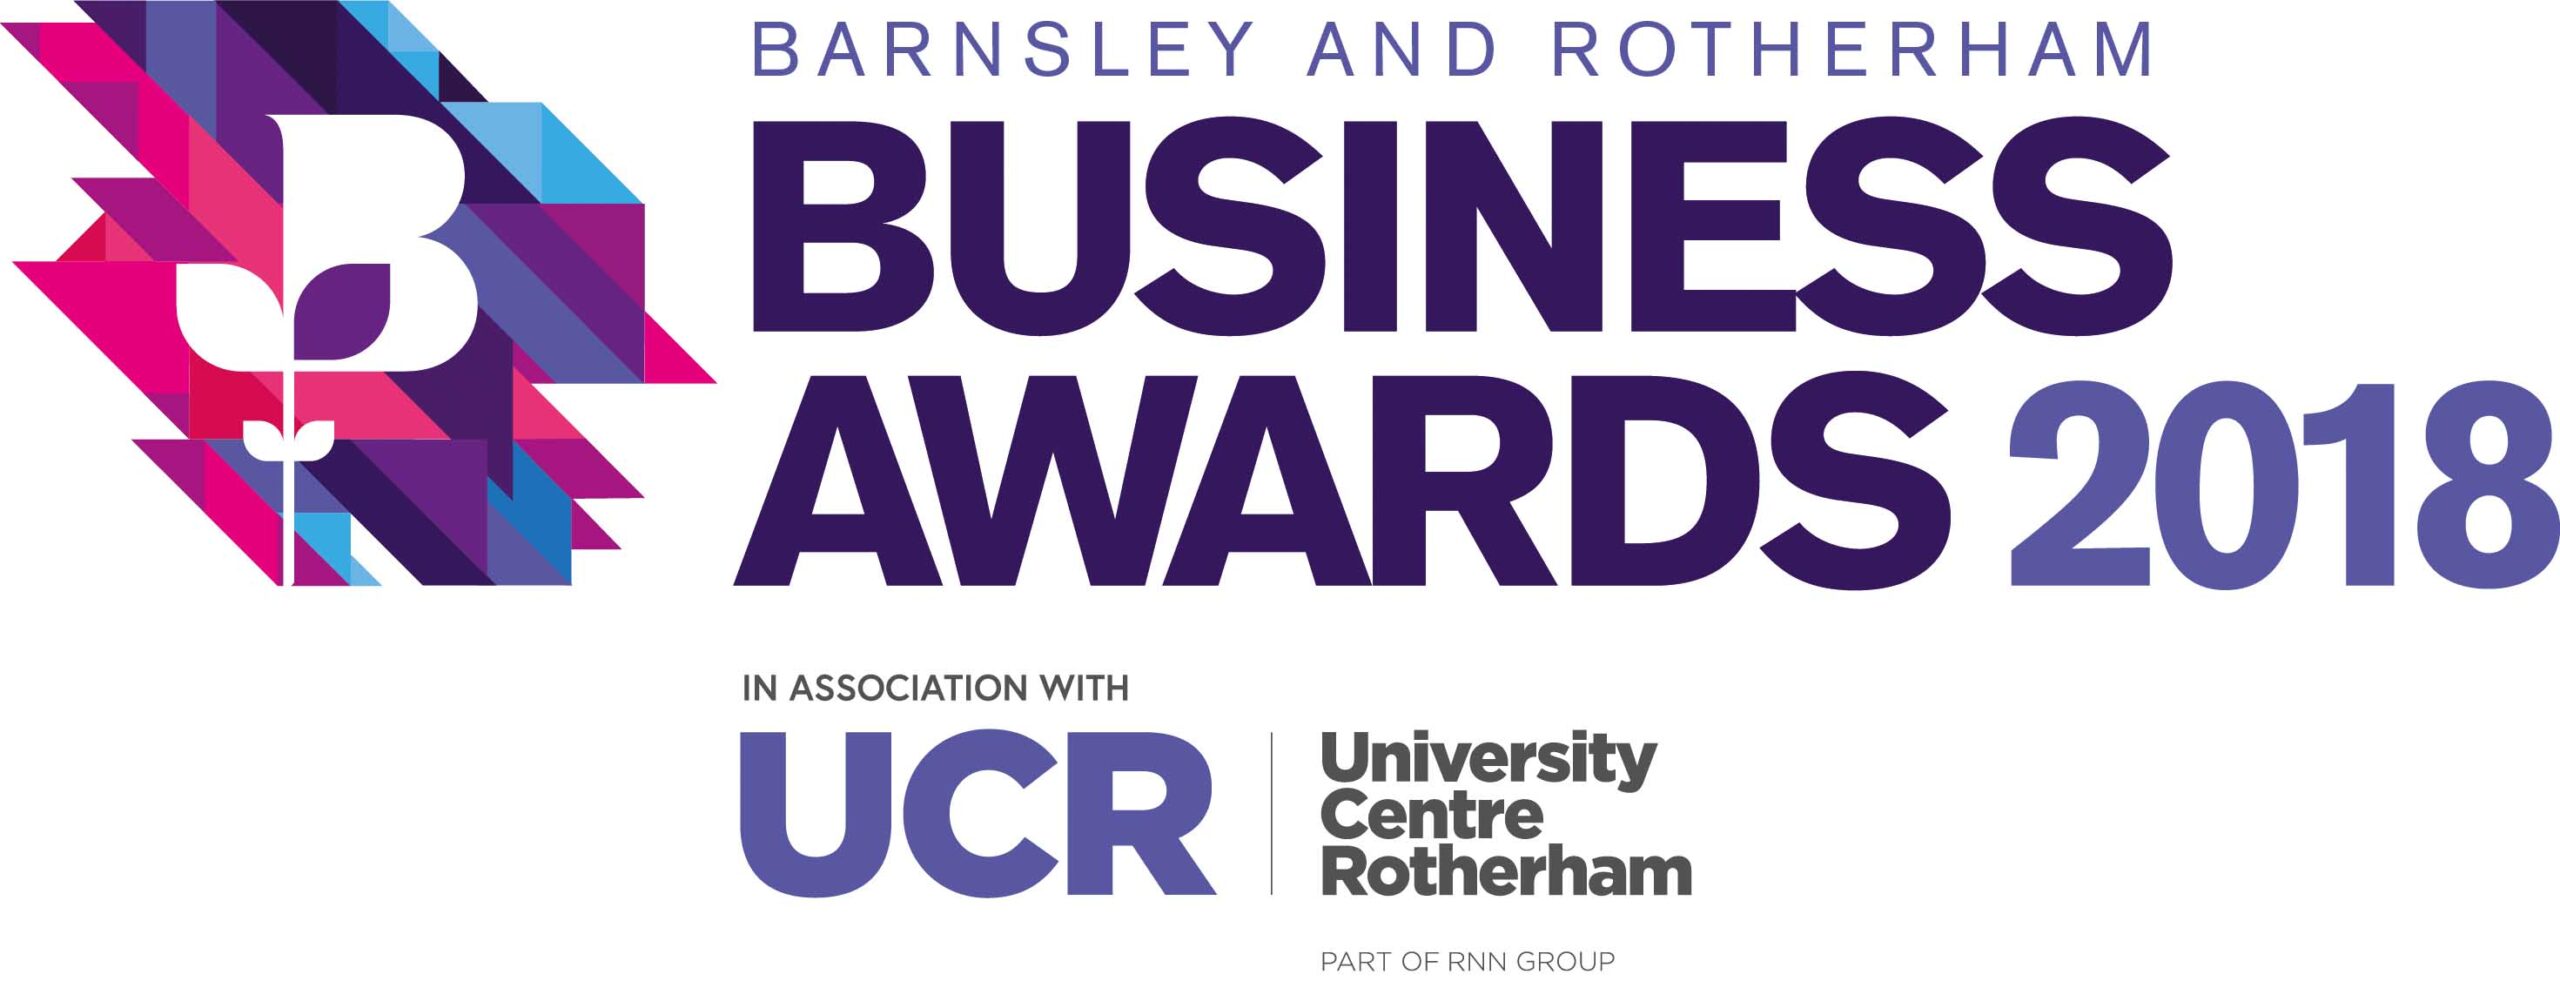 University Centre Rotherham announced as headline sponsor for Barnsley and Rotherham Business Awards